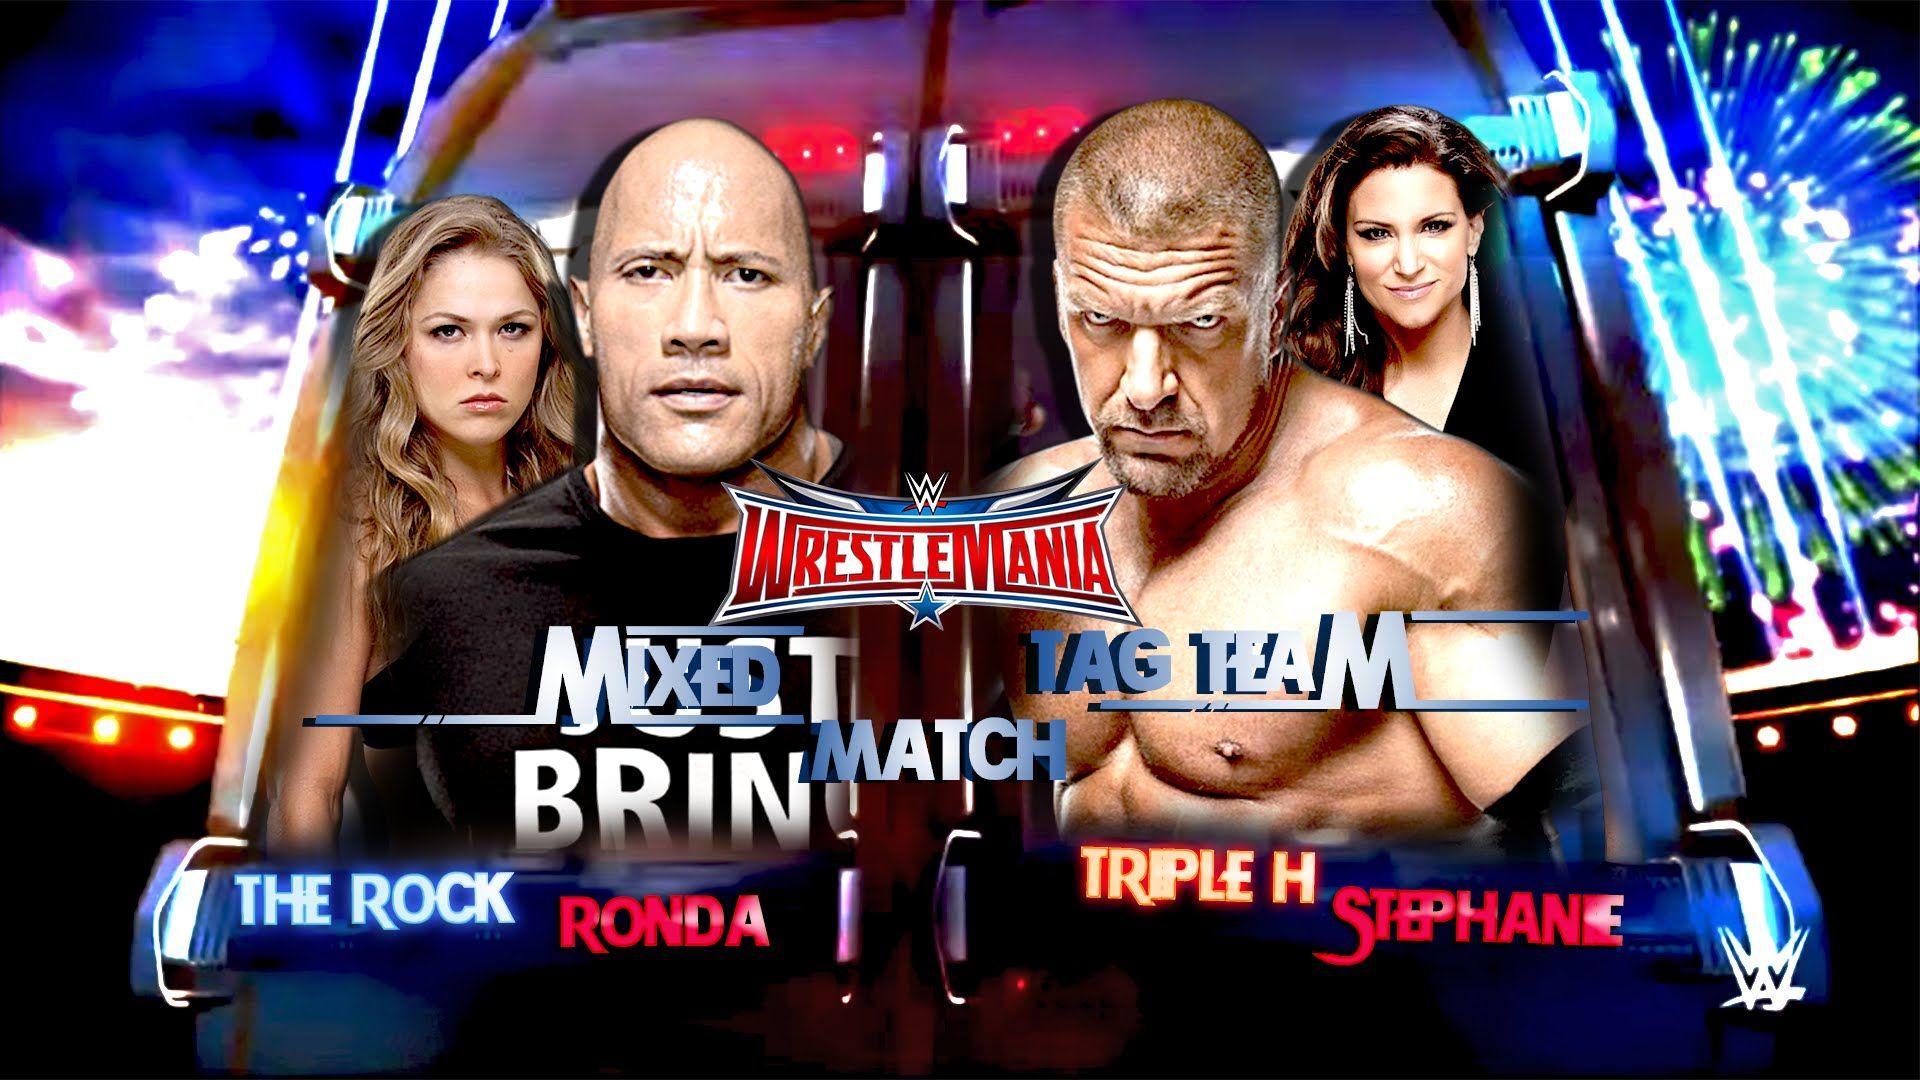 WrestleMania 32 2016 Matchcard